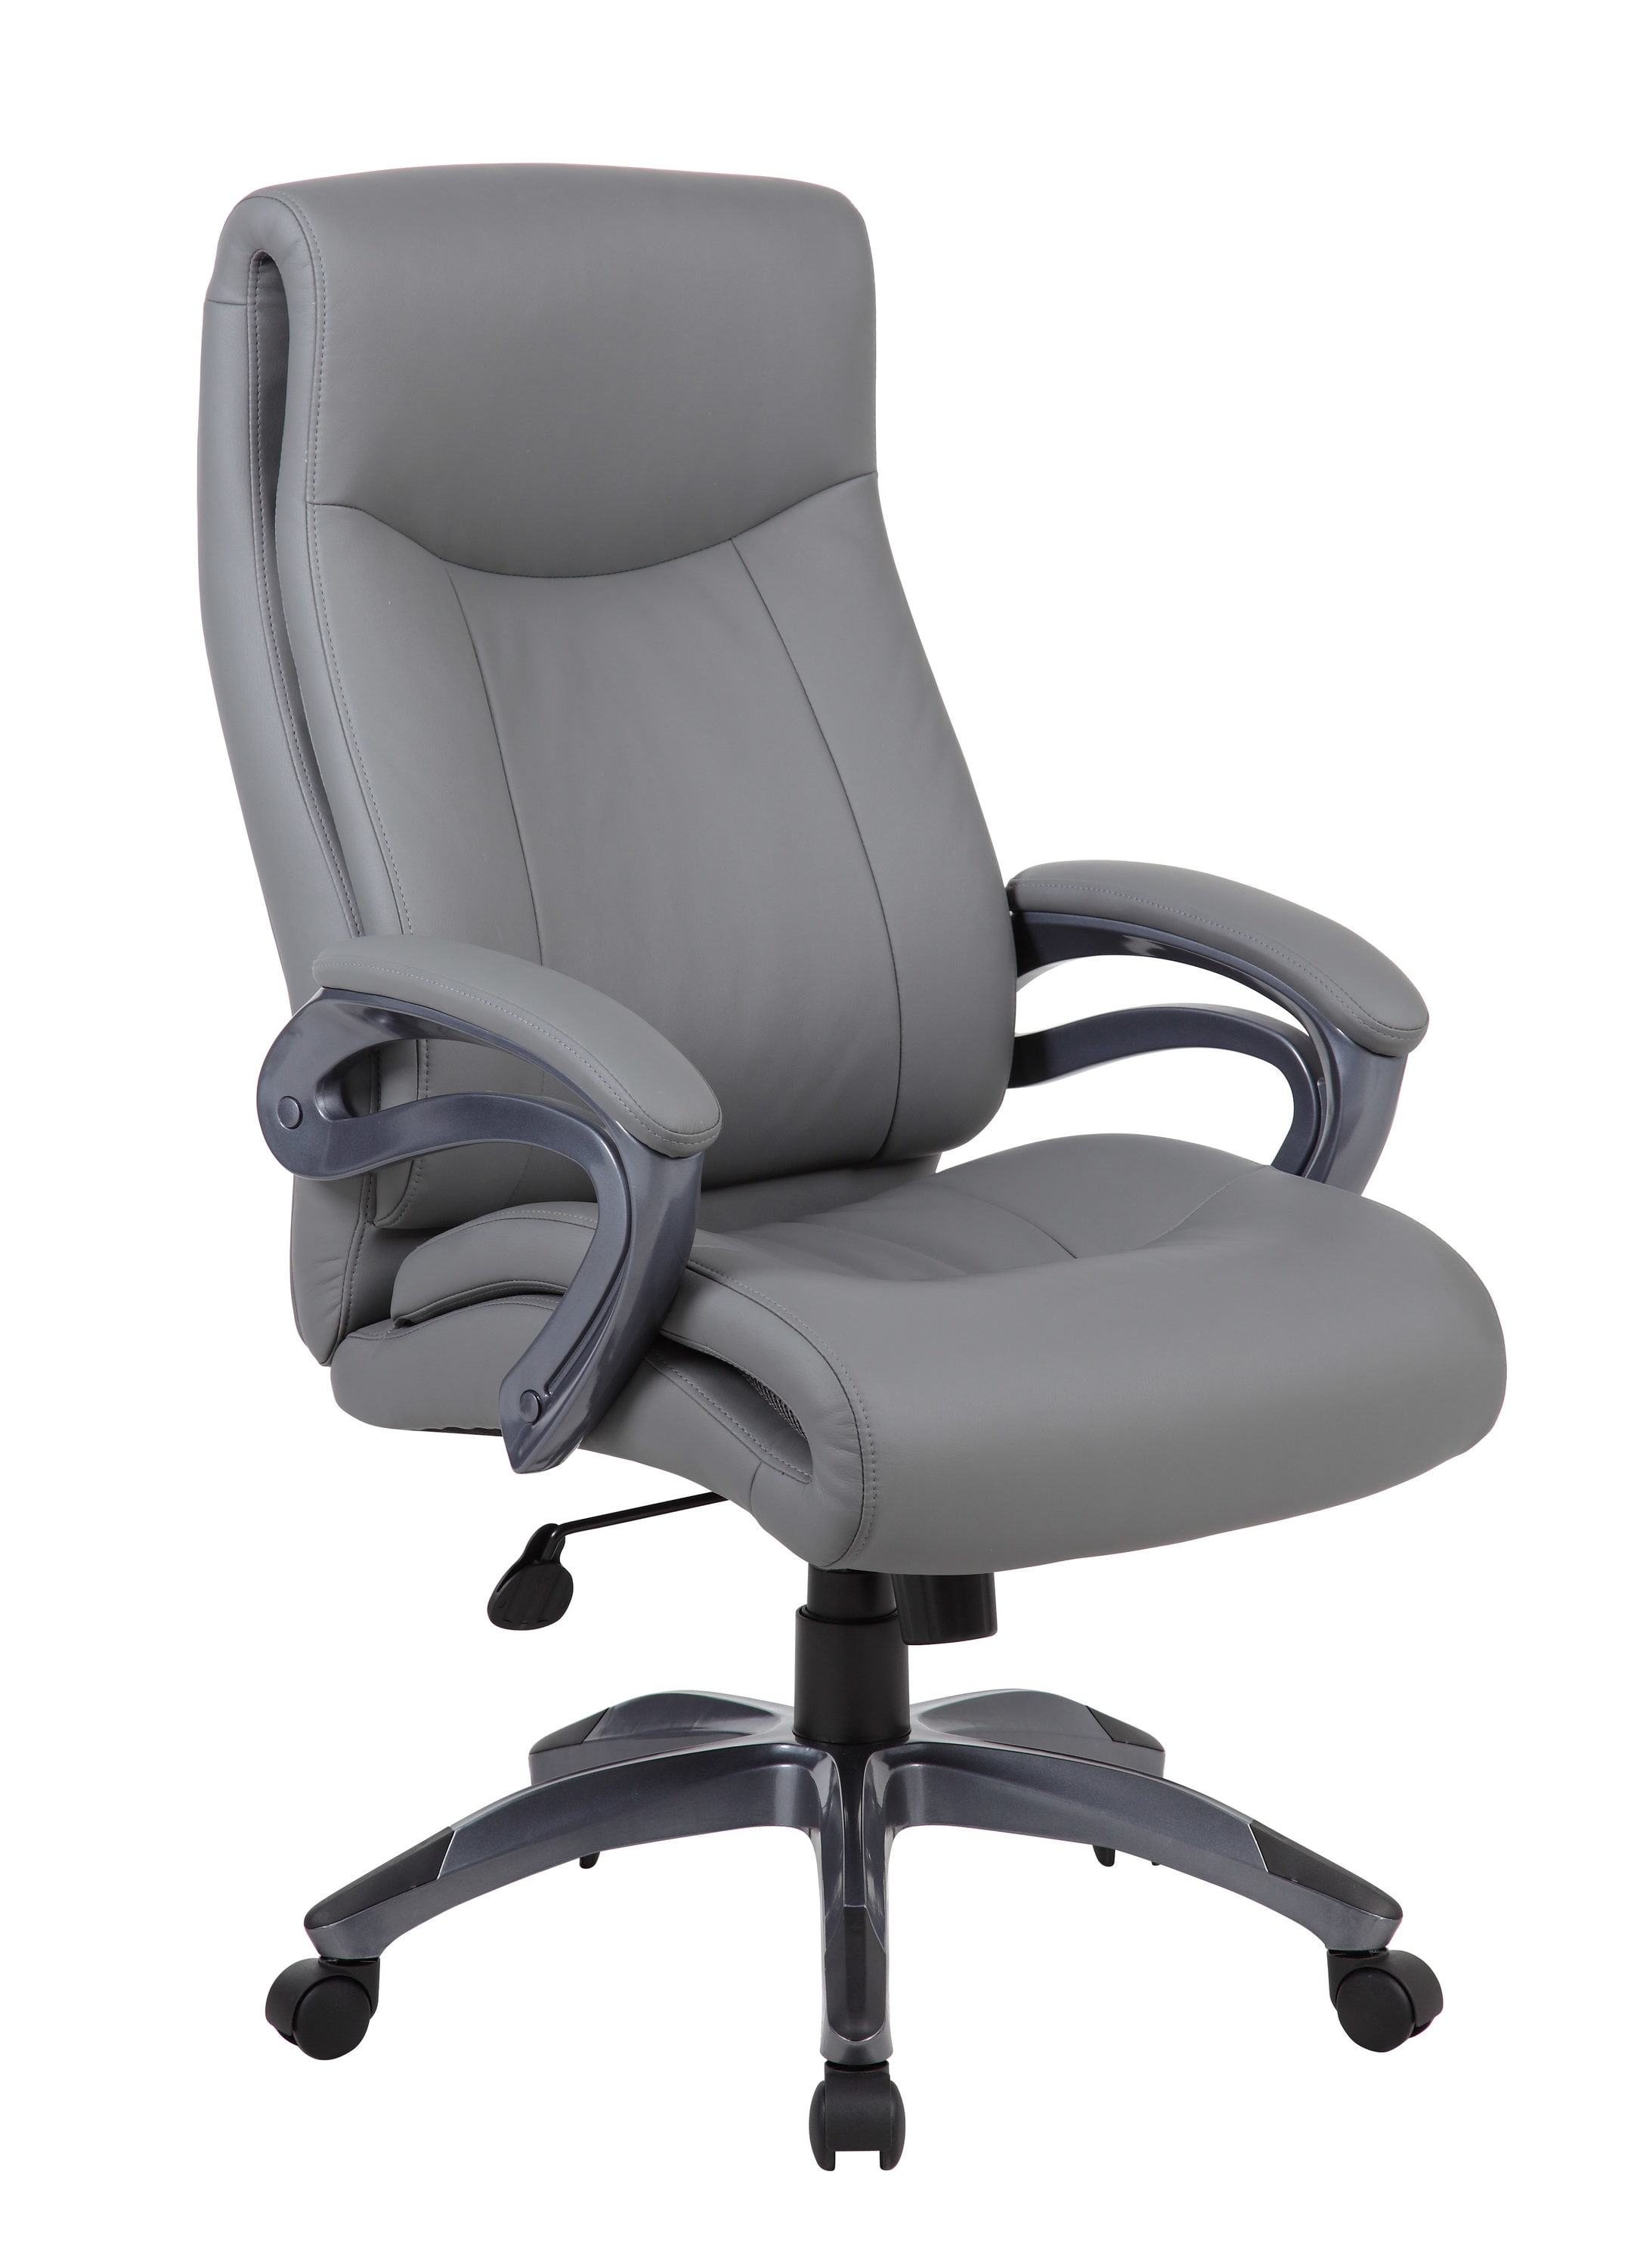 Ergonomic Swivel Executive Adjustable Recliner Desk Chair, Light Grey